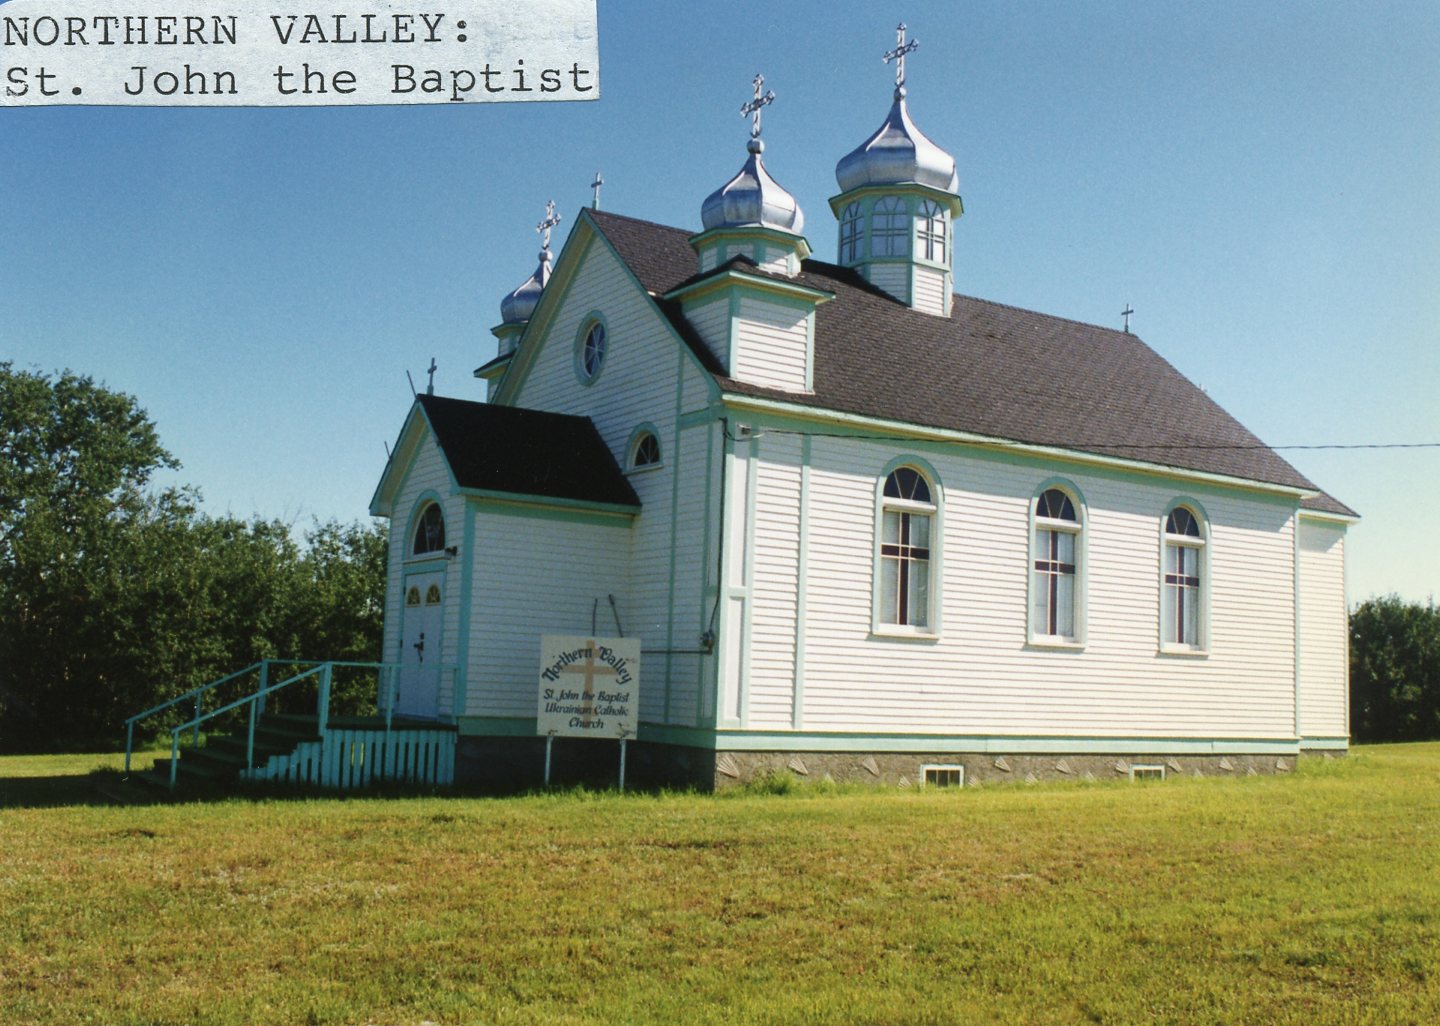 St. John the Baptist Parish - Northern Valley, AB (St. Paul District)